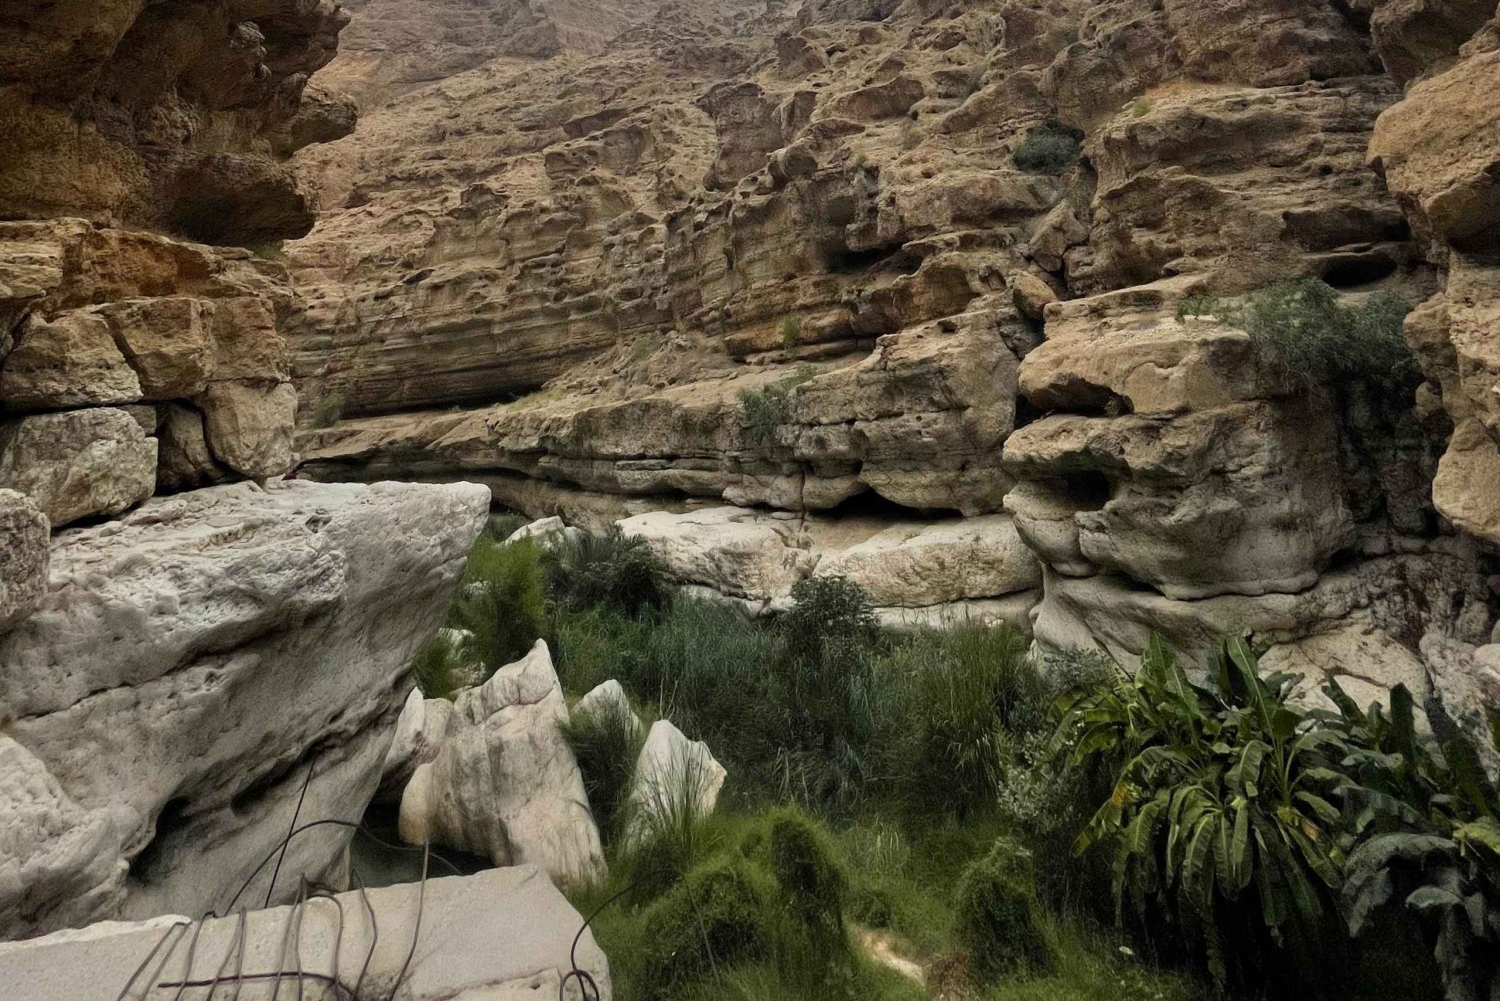 Wadi Shab &Bimmah Sinkhole &Heart shaped Cave &Pebble Beach